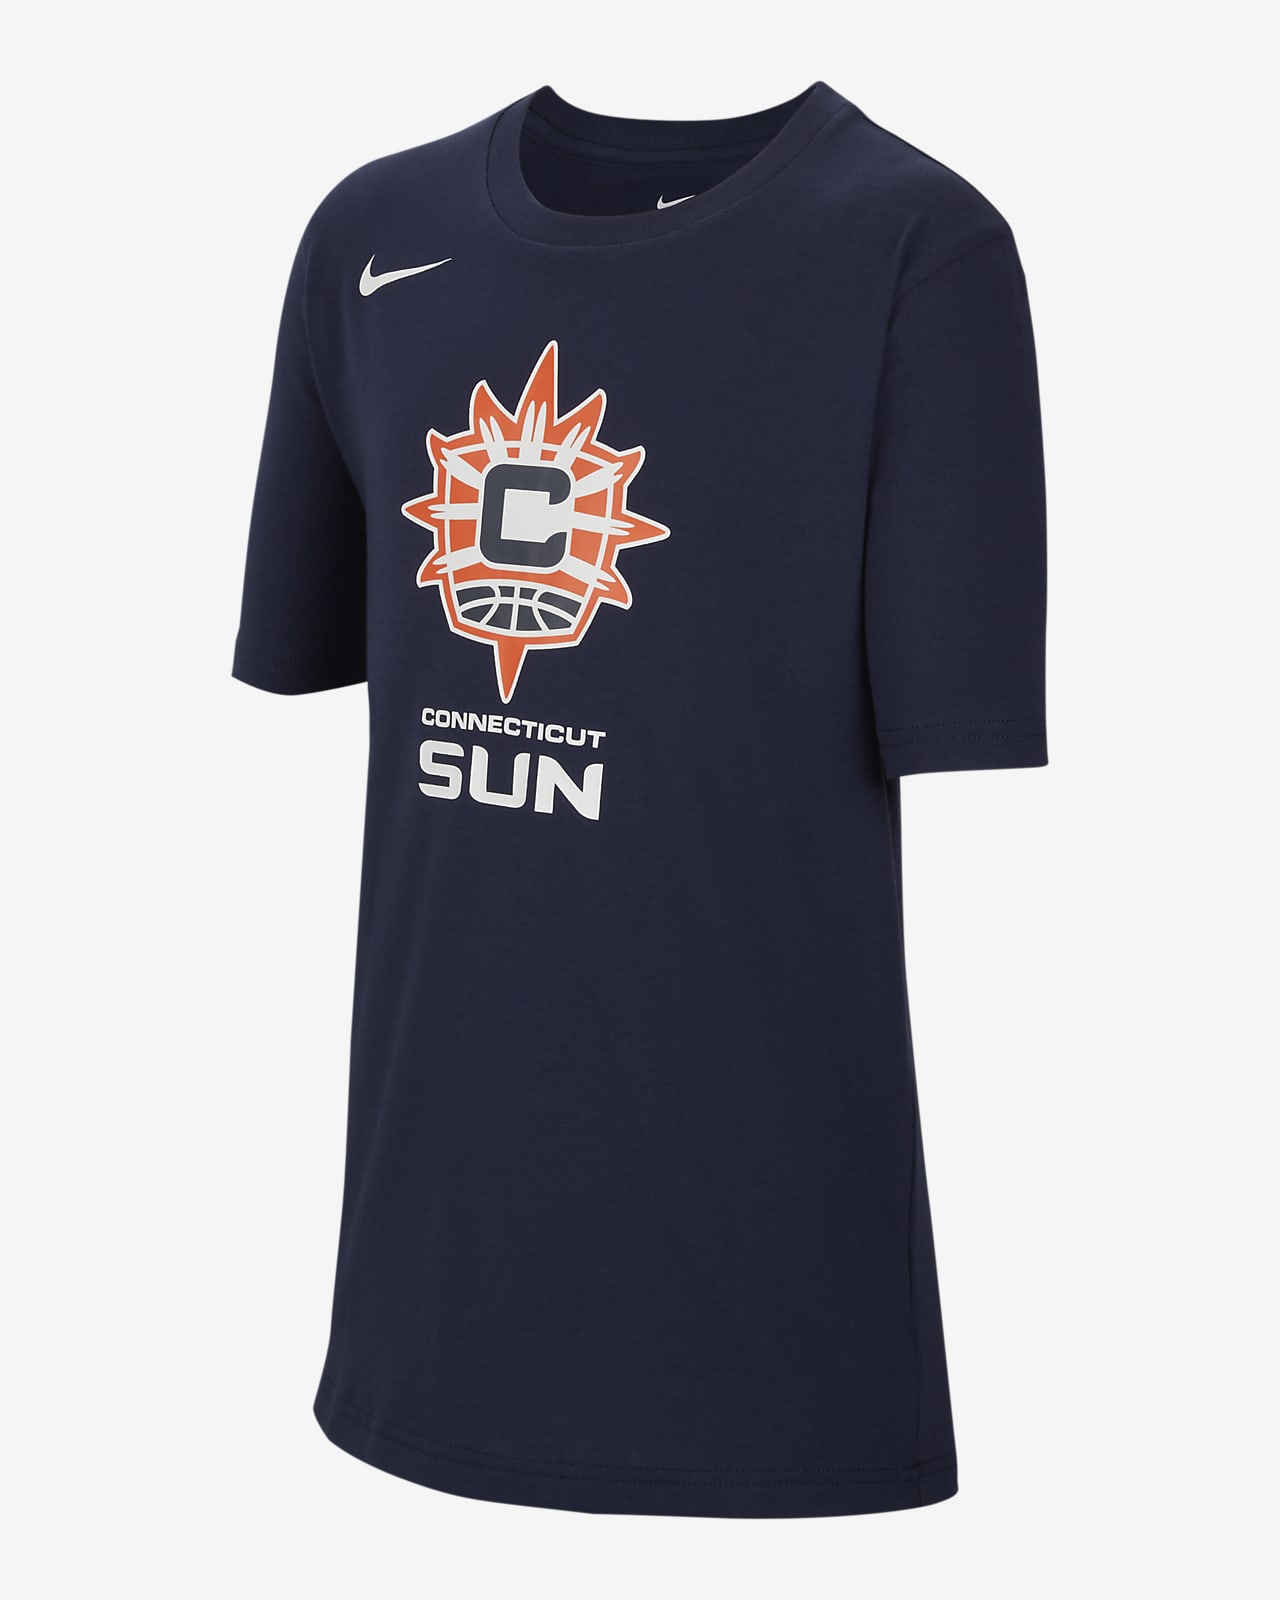 Playera Nike WNBA para niños talla grande Connecticut Sun